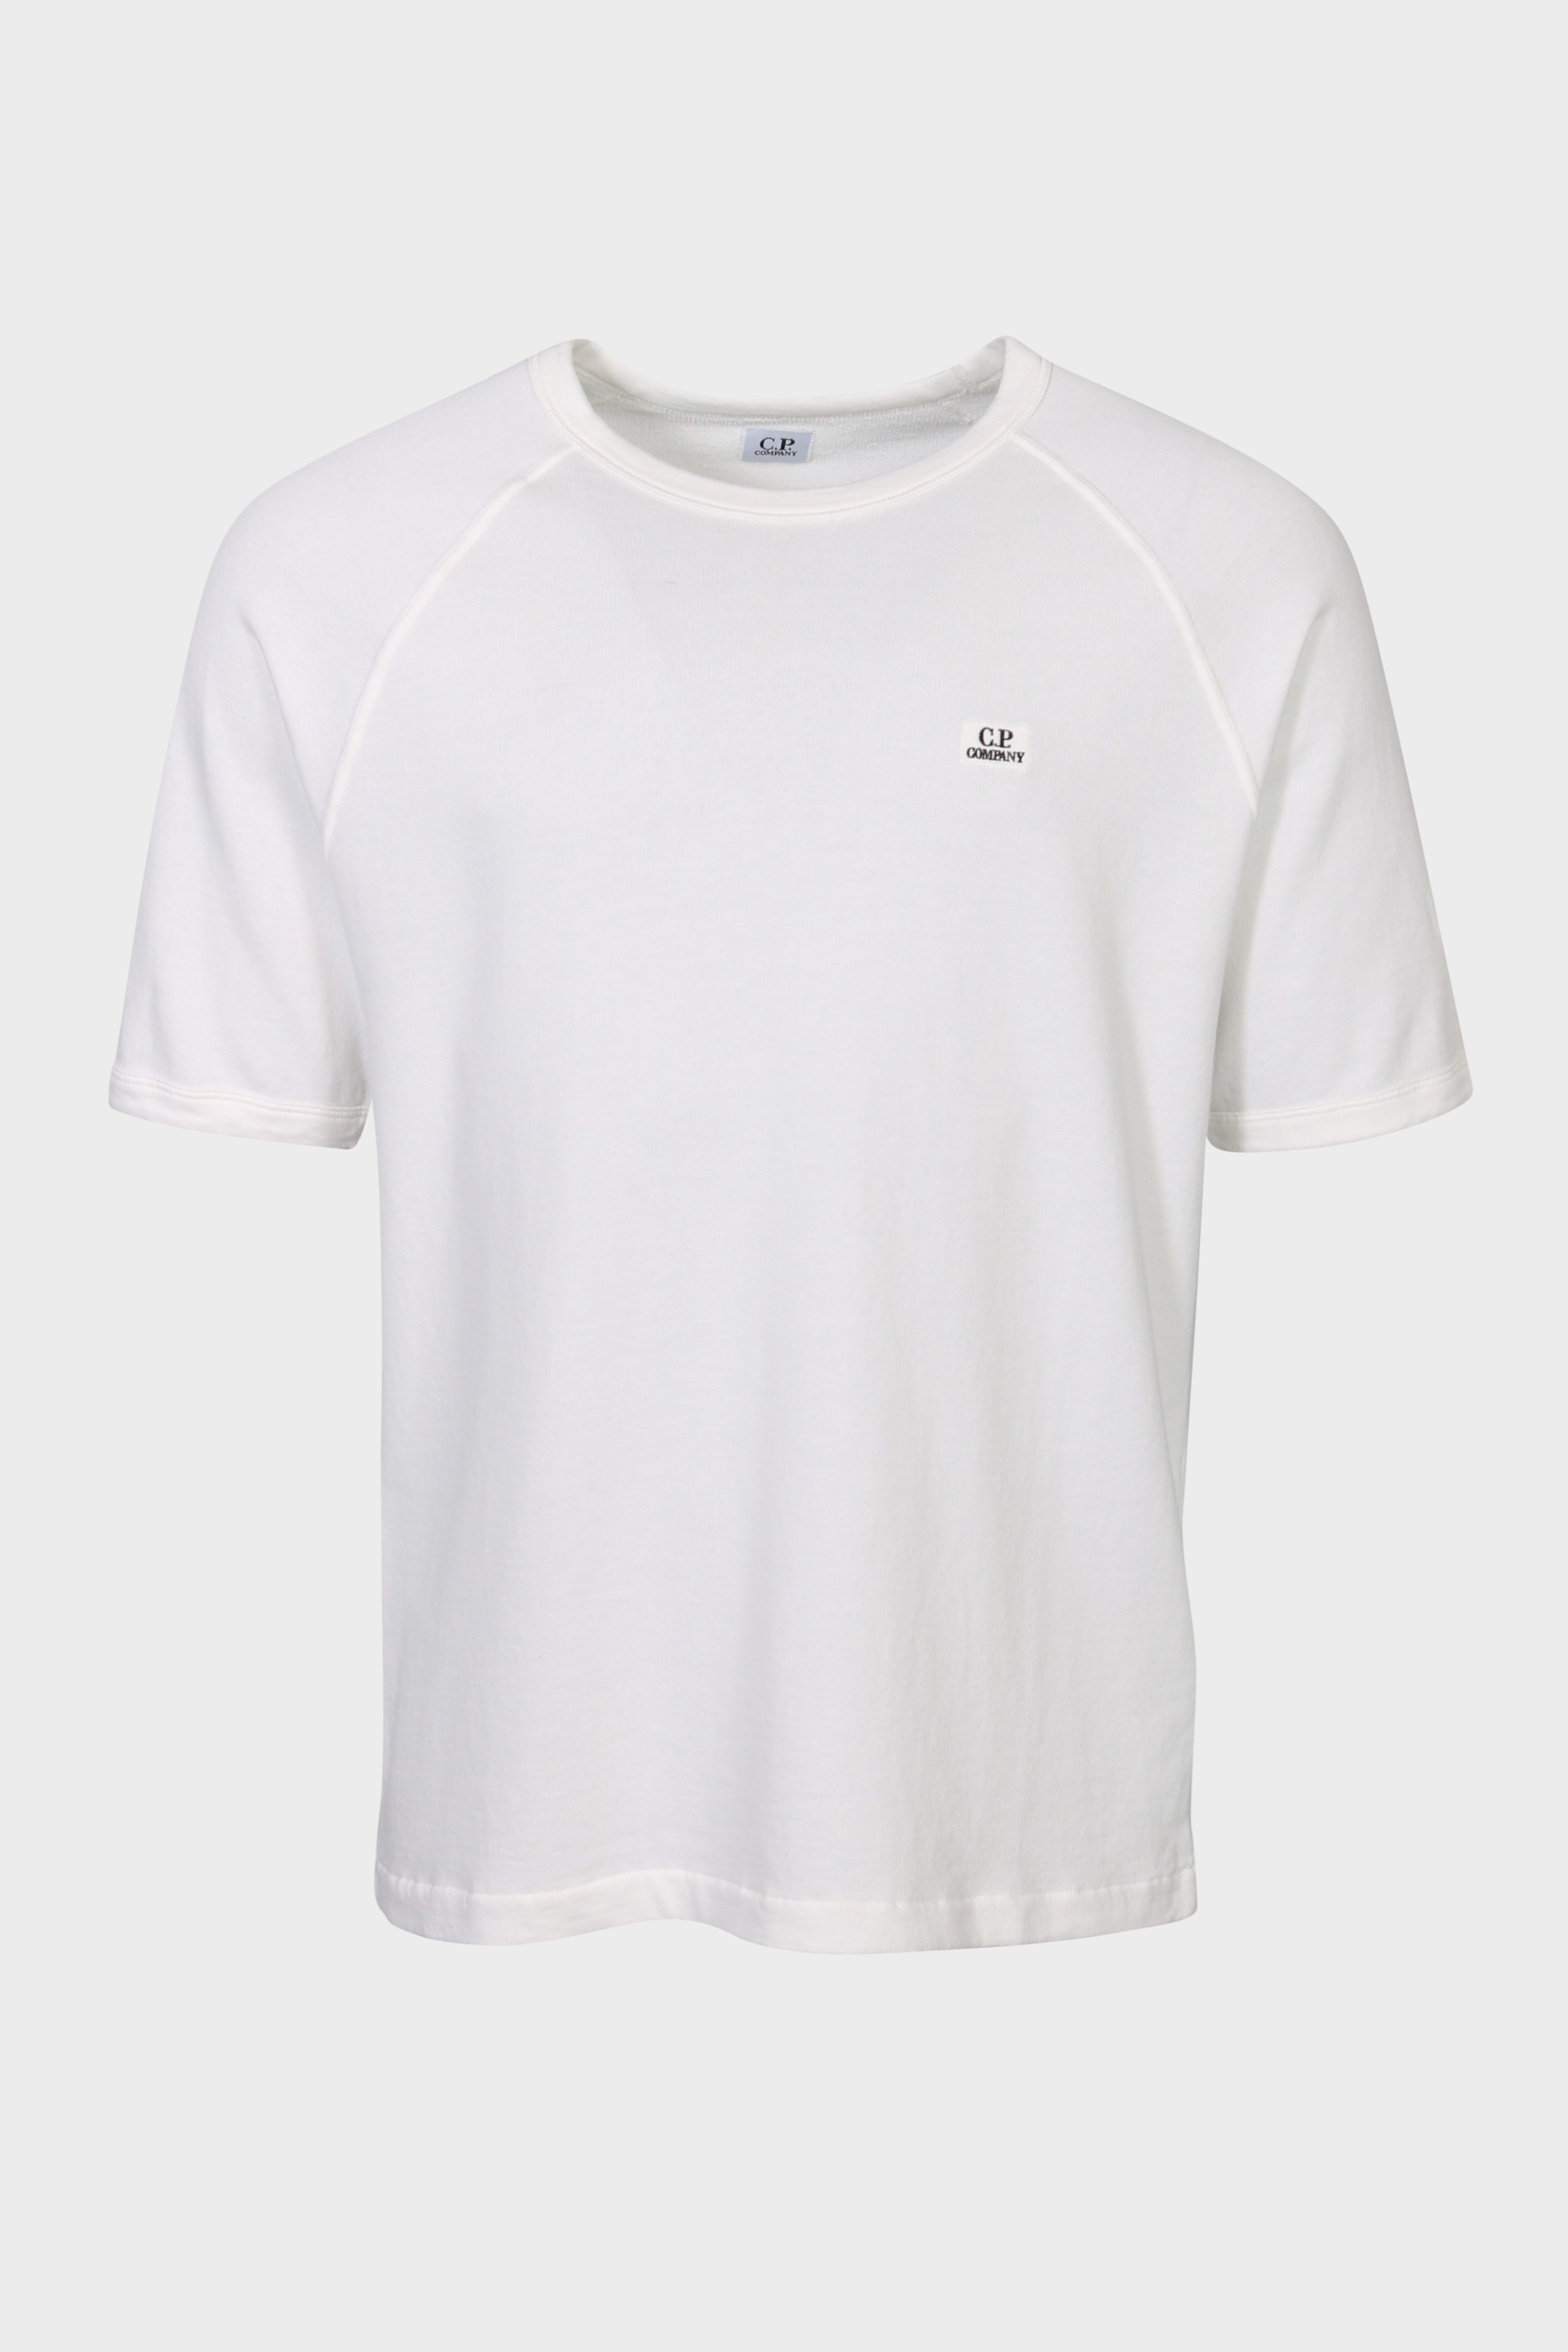 C.P. COMPANY Light Short Sleeve Sweatshirt in White